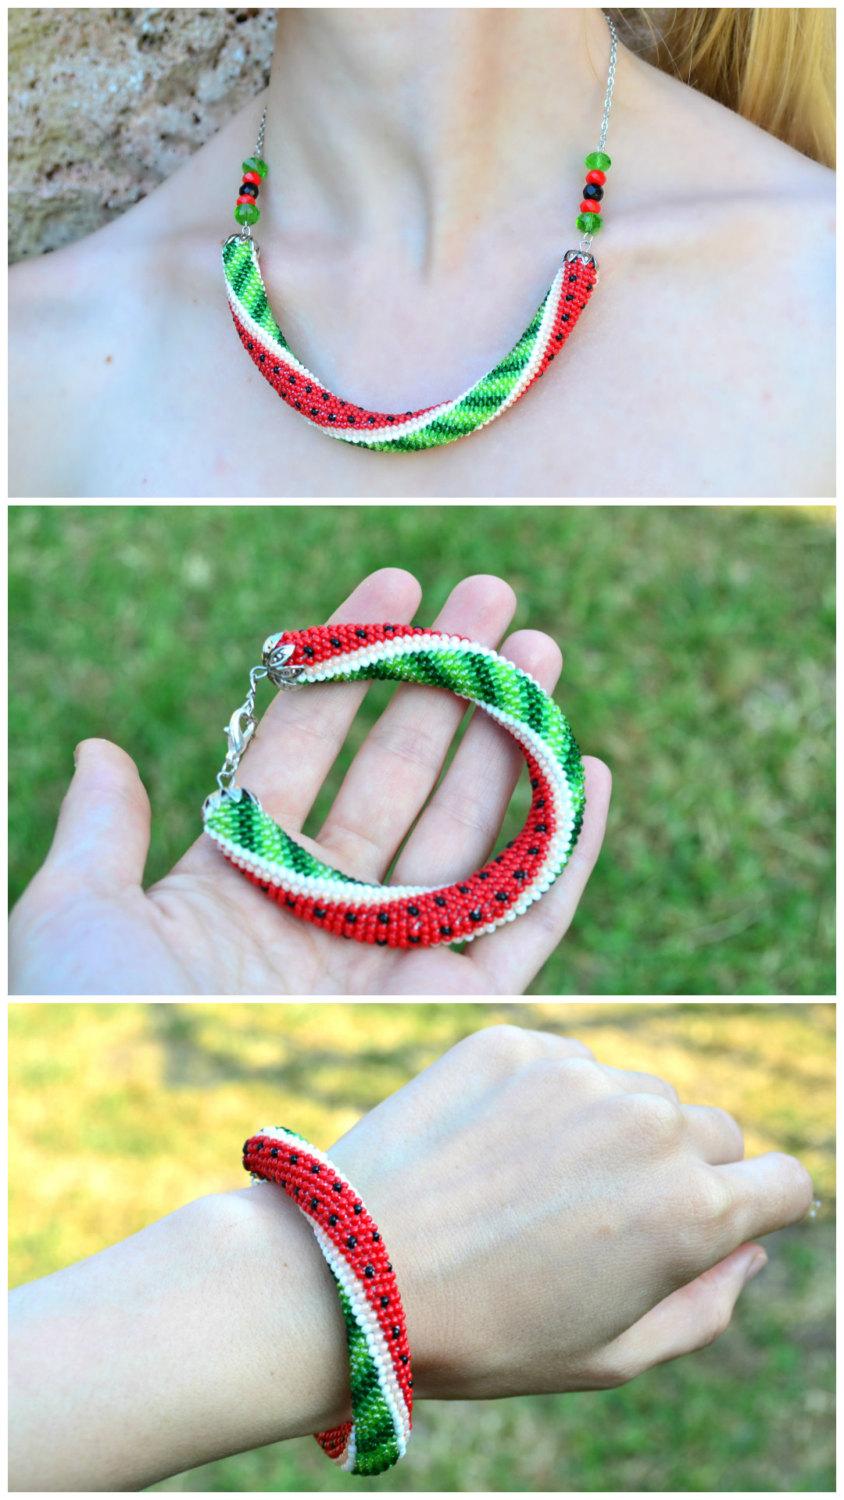 Mariage - 10% OFF Watermelon bracelet necklace jewelry. Berry jewelry bracelet necklace. Green red summer berry bead crochet rope bracelet jewelry.